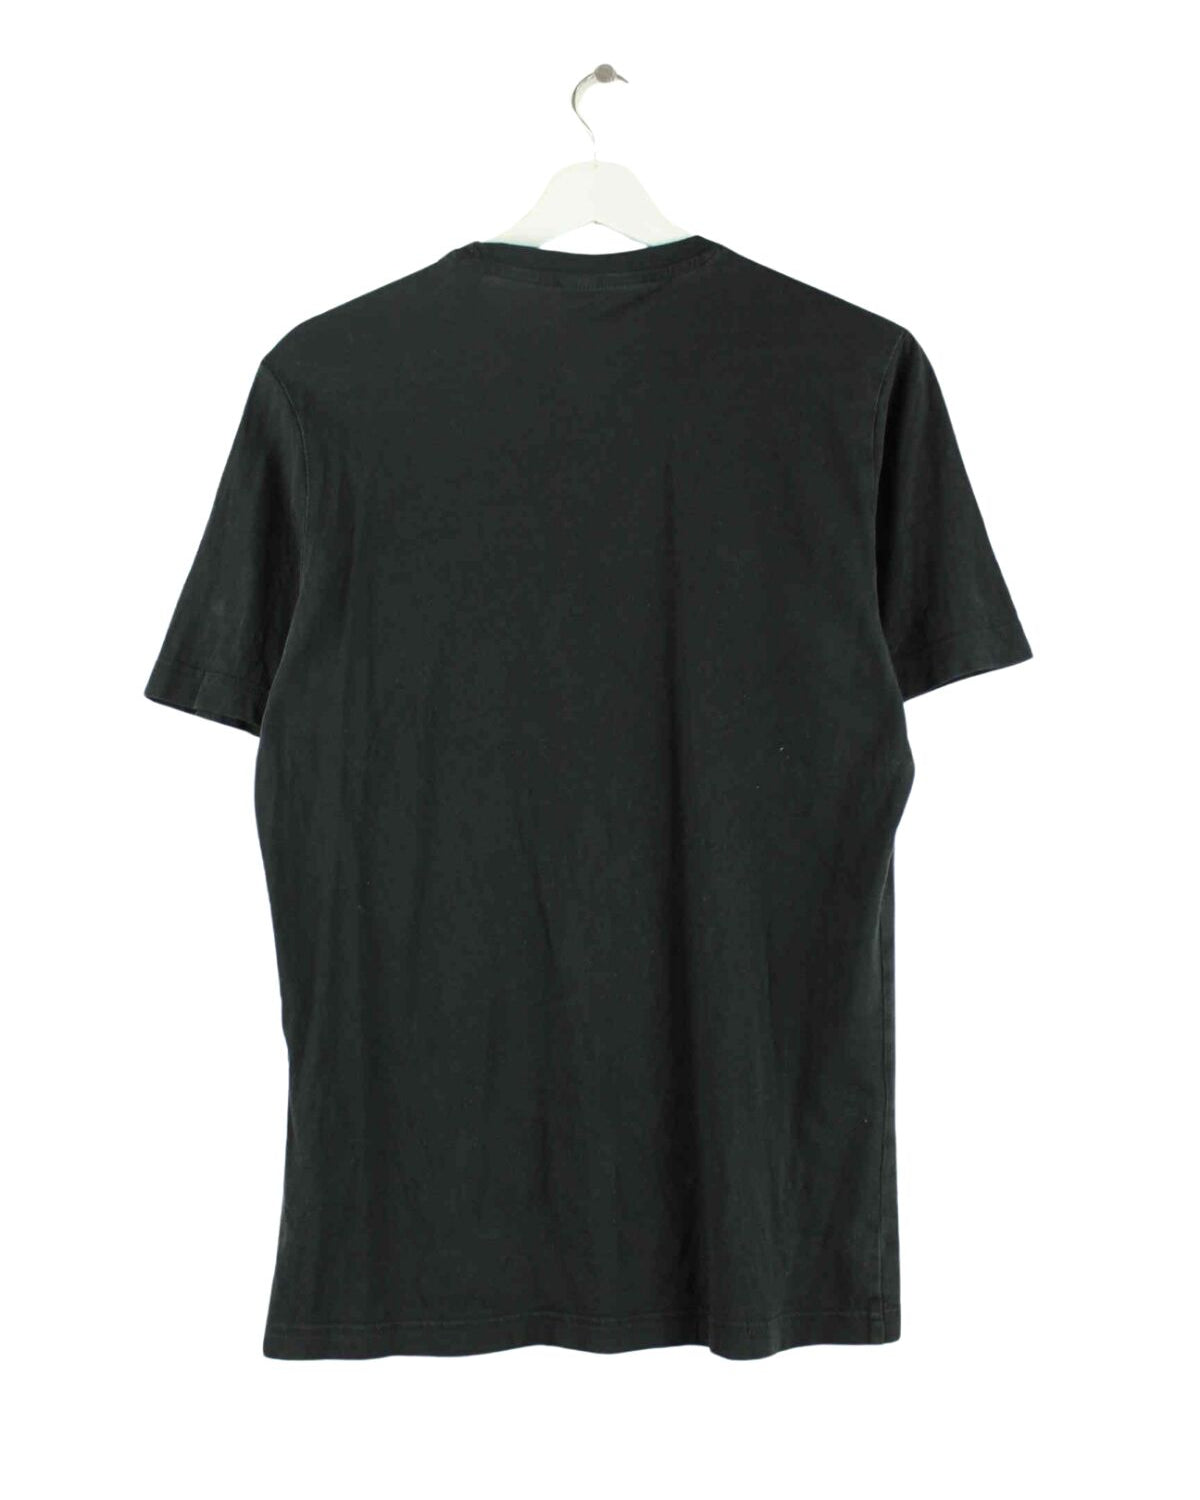 Reebok Basic Embroidered T-Shirt Schwarz S (back image)